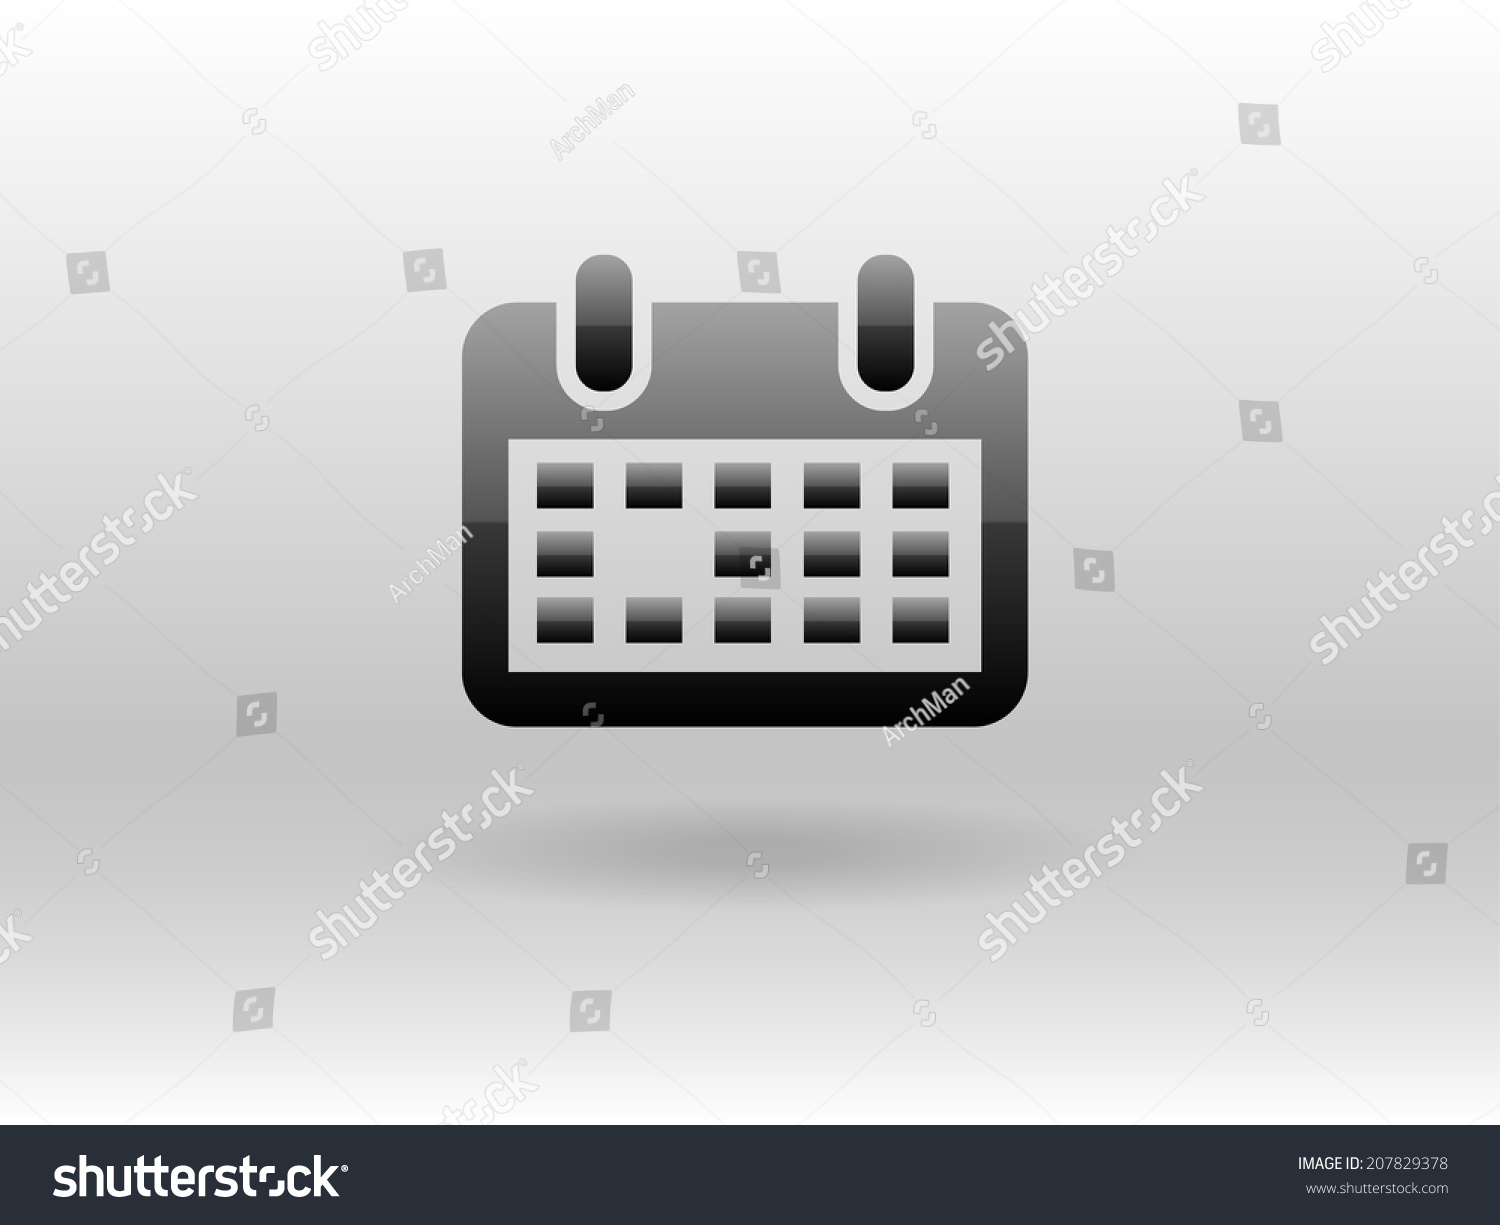 Flat Icon Of Calendar Stock Photo 207829378 : Shutterstock